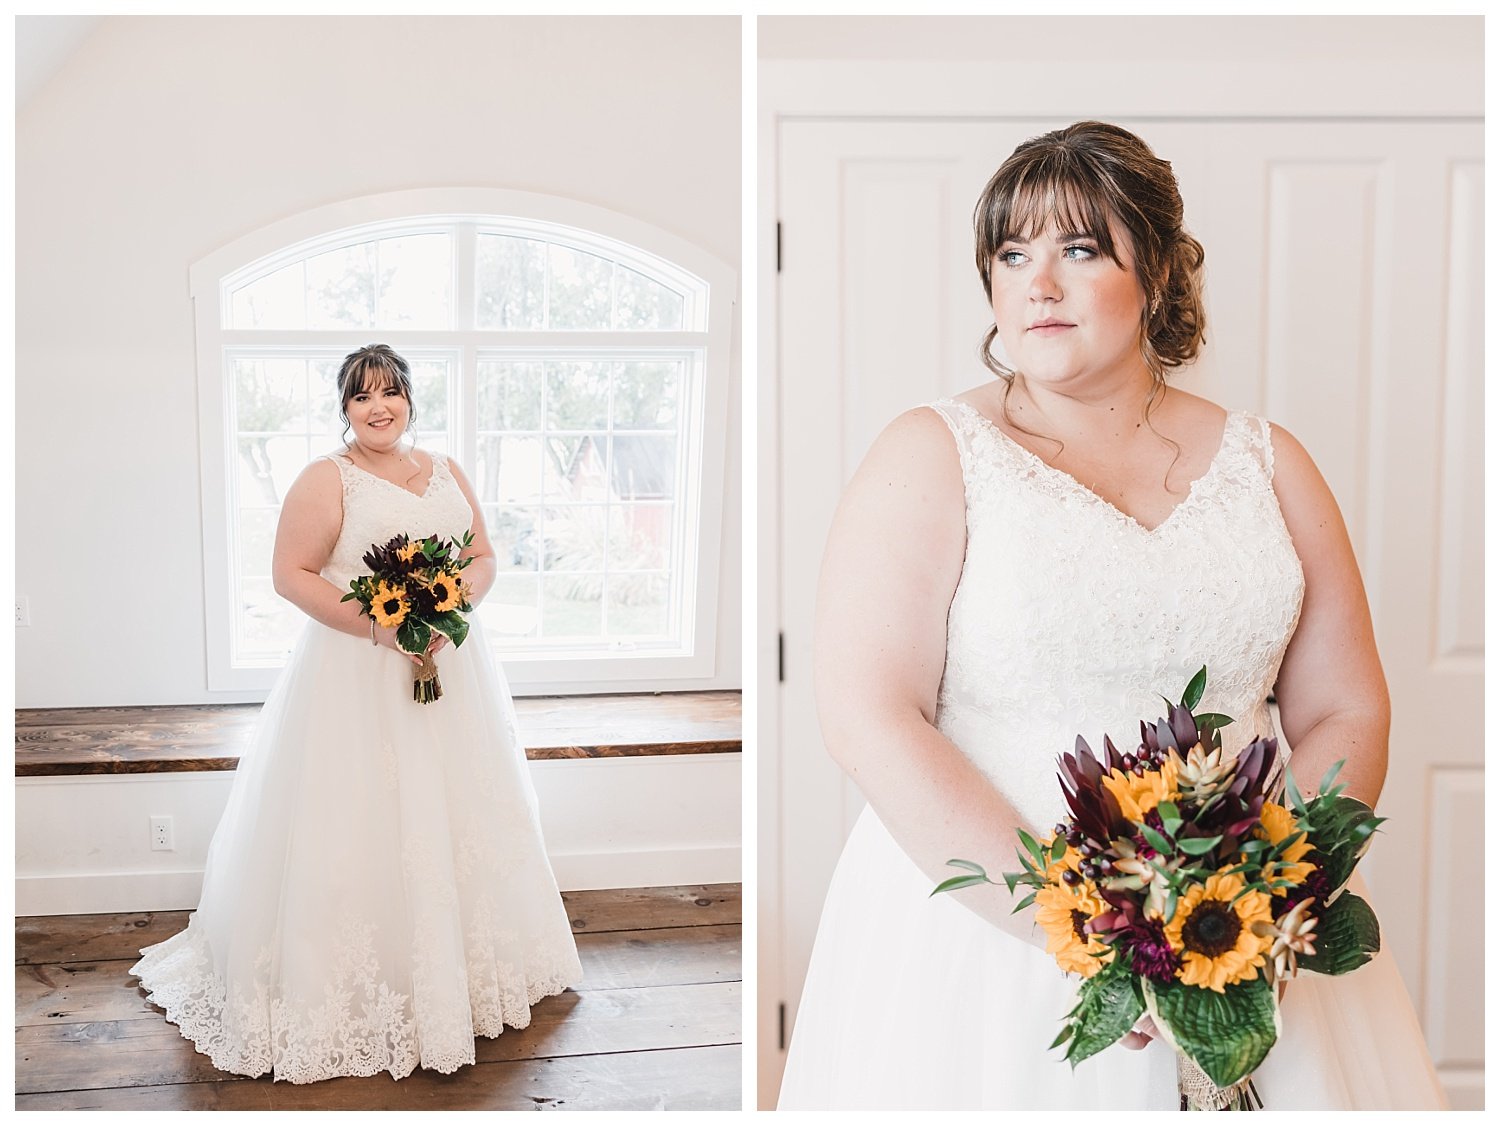 Osbornia Farm wedding, quarryville pa, bridal portraits, sunflowers, bouquet